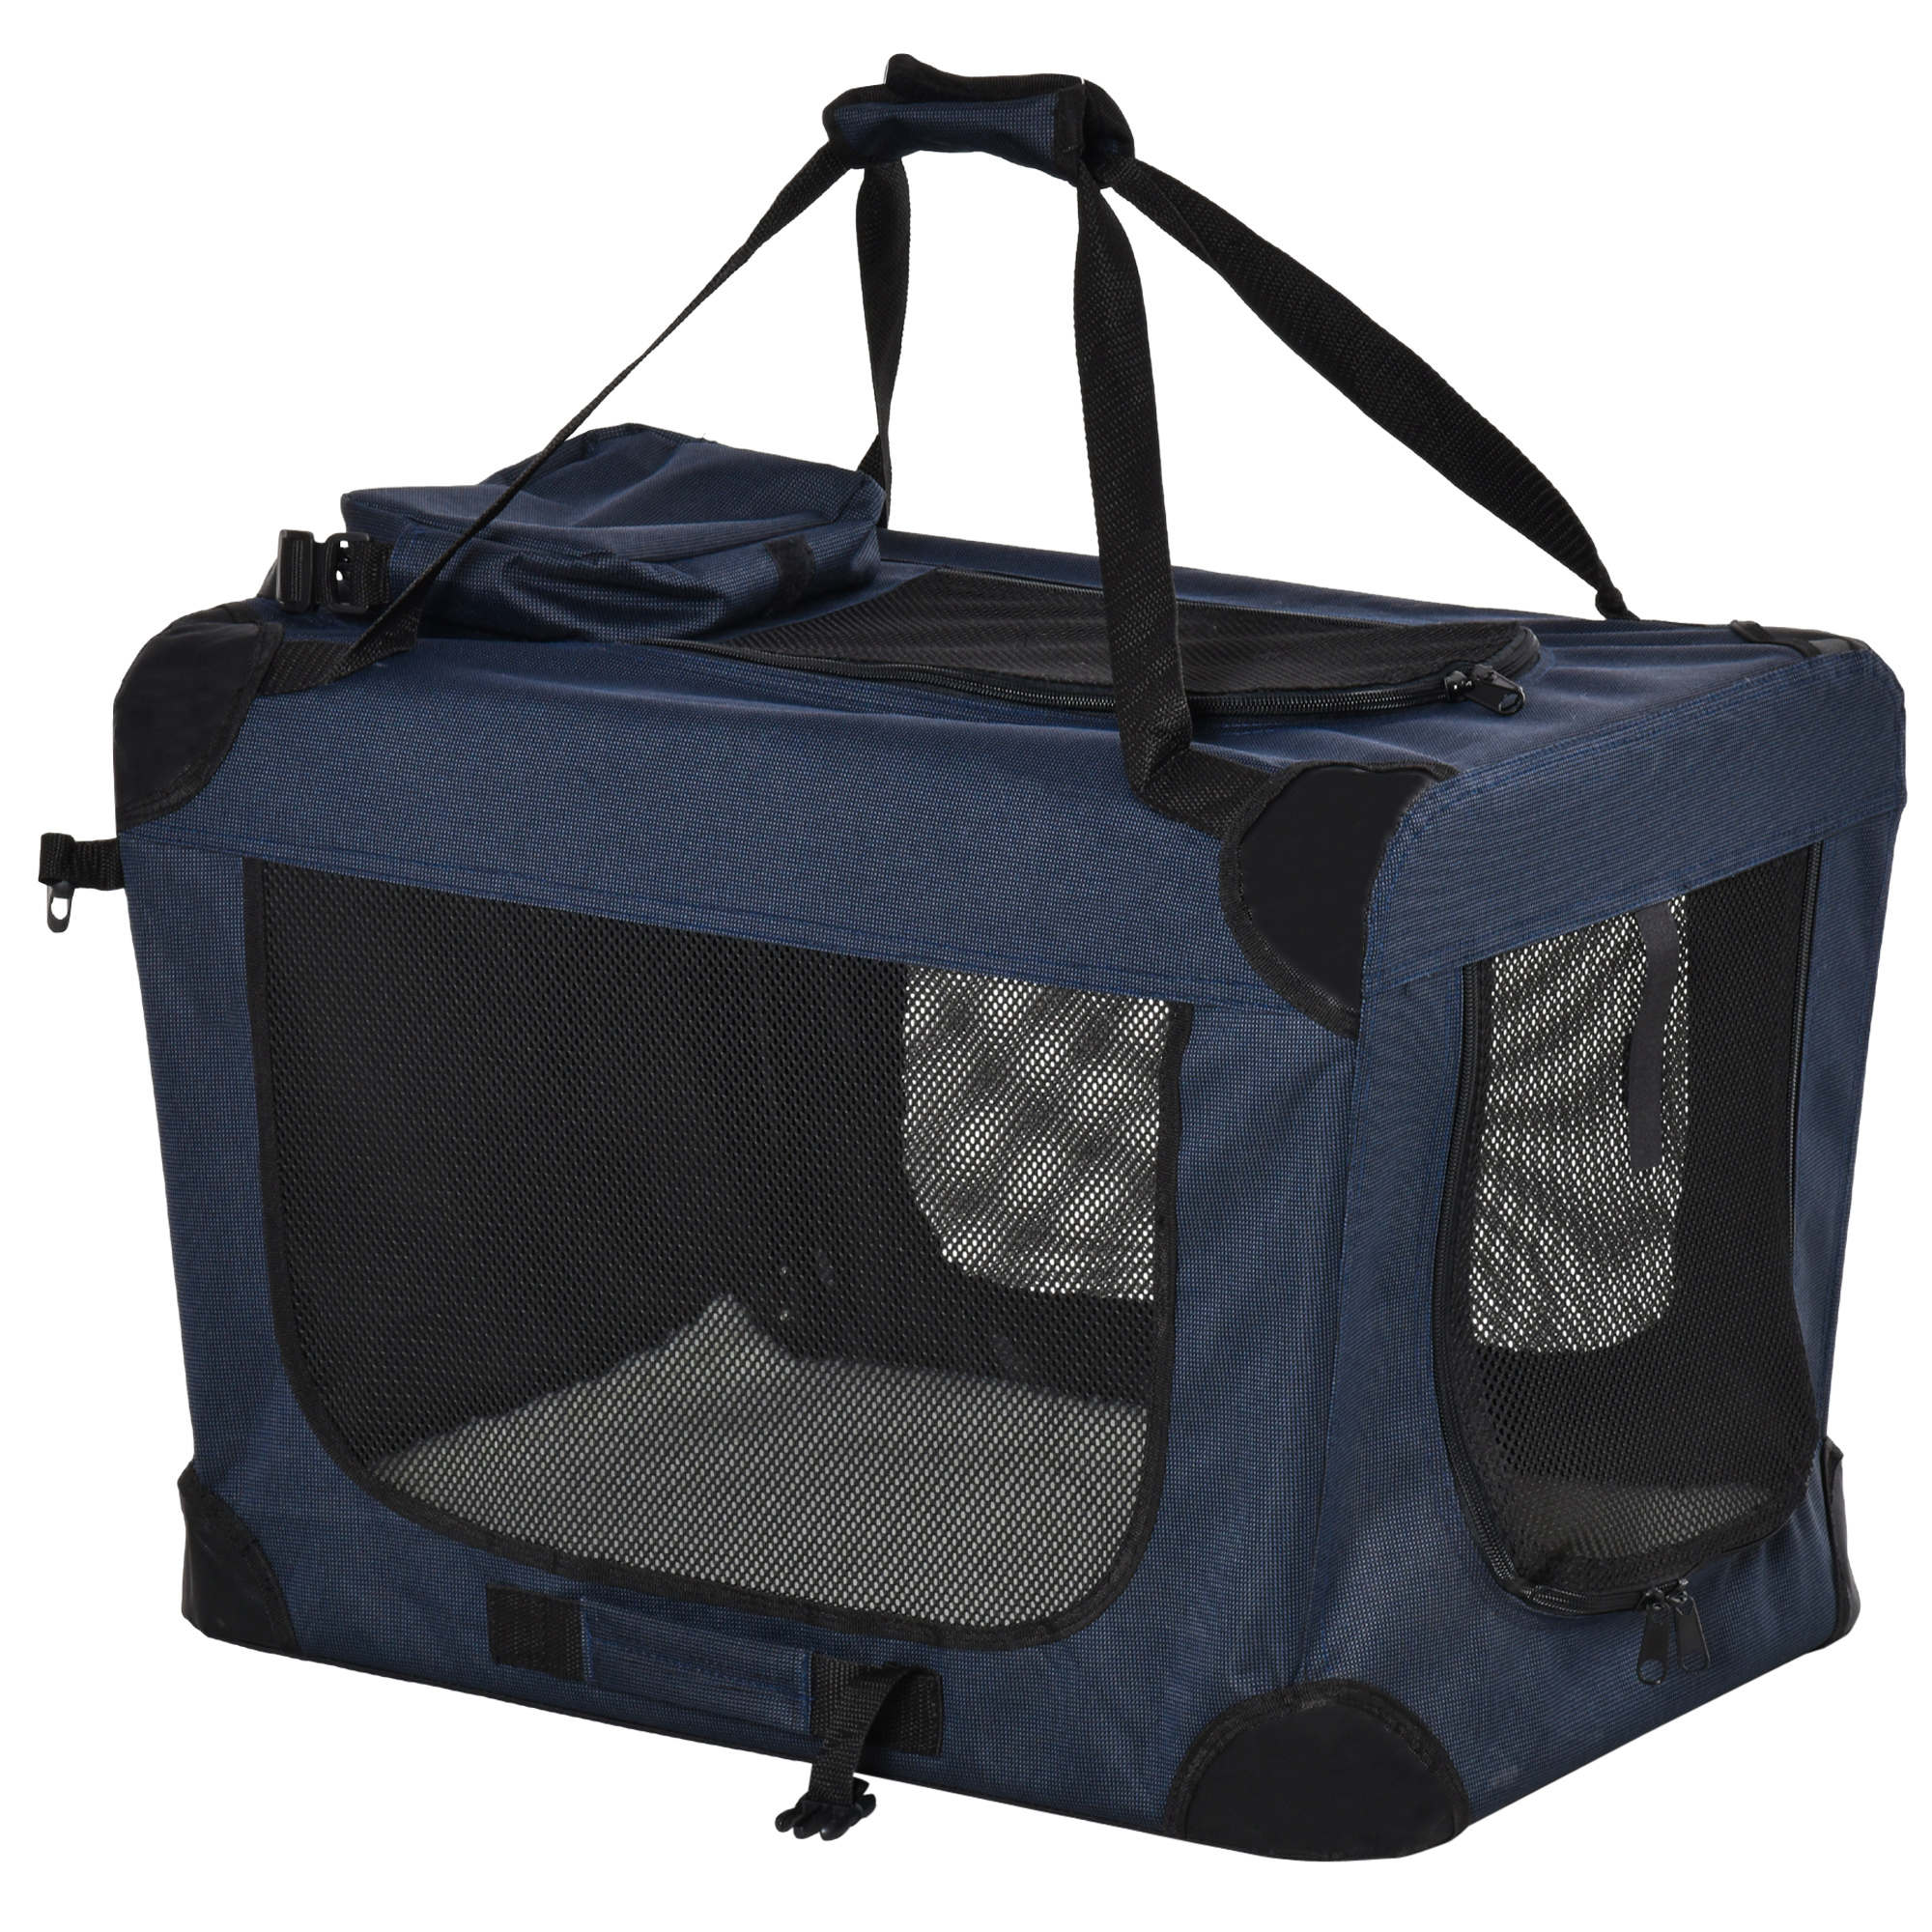 PawHut Folding Pet Carrier, Soft Portable Dog & Cat Crate with Cushion, Durable Travel Bag, 60 x 41.5 x 41 cm, Dark Blue